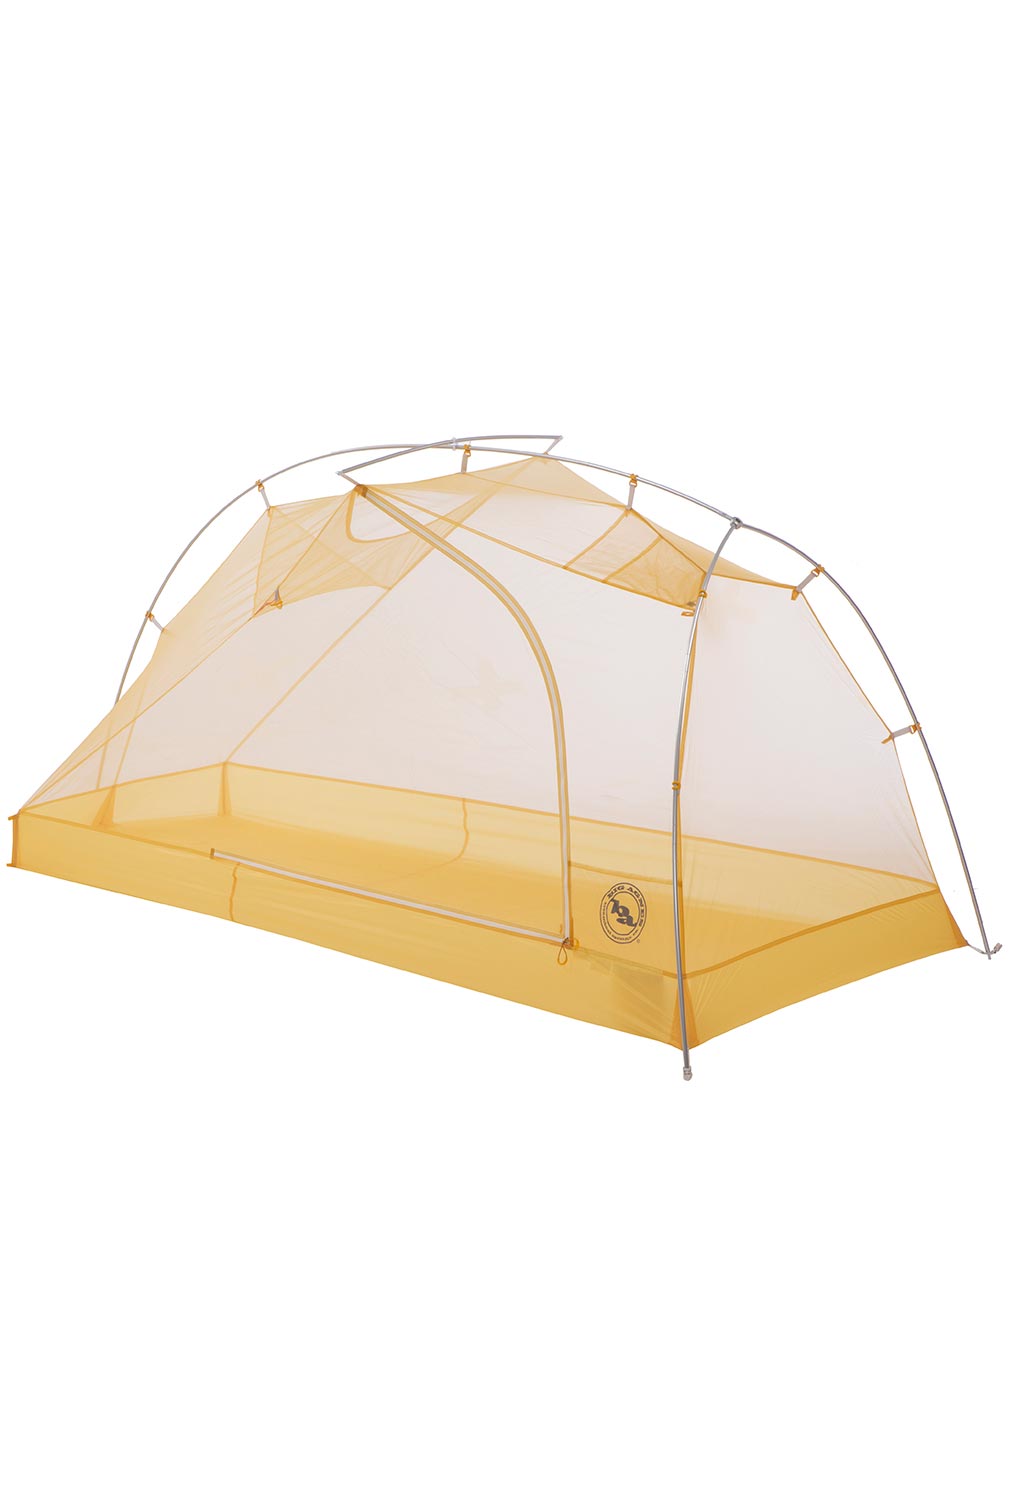 Big Agnes Tiger Wall UL1 Solution Dye Tent - Gray/Yellow